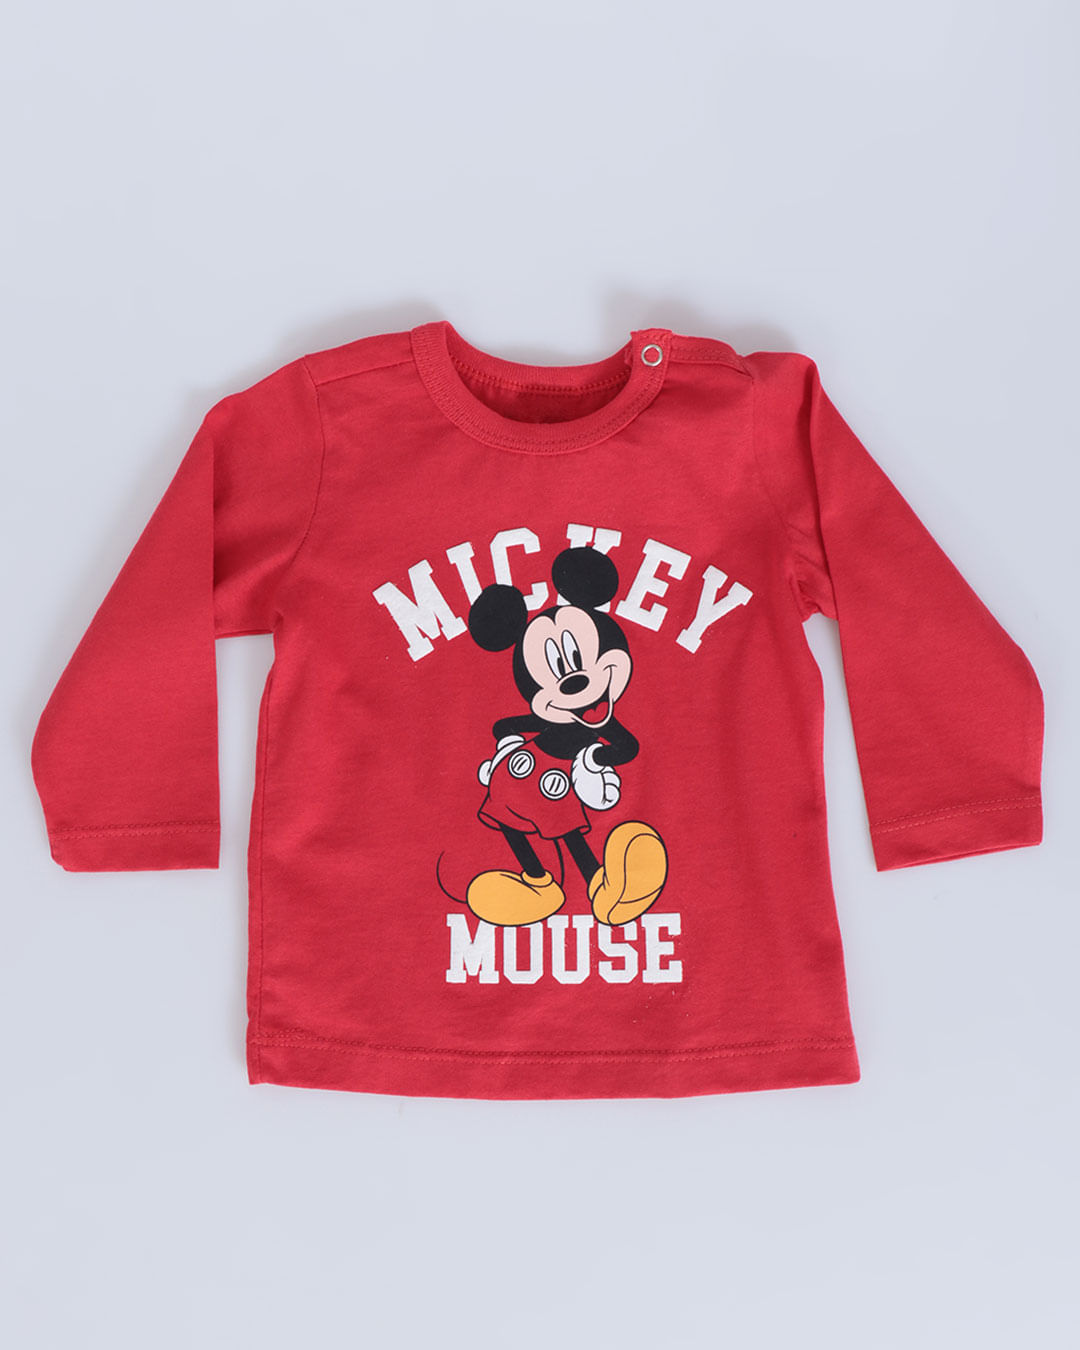 Camiseta-Bebe-Manga-Longa-Mickey-Disney-Vermelha